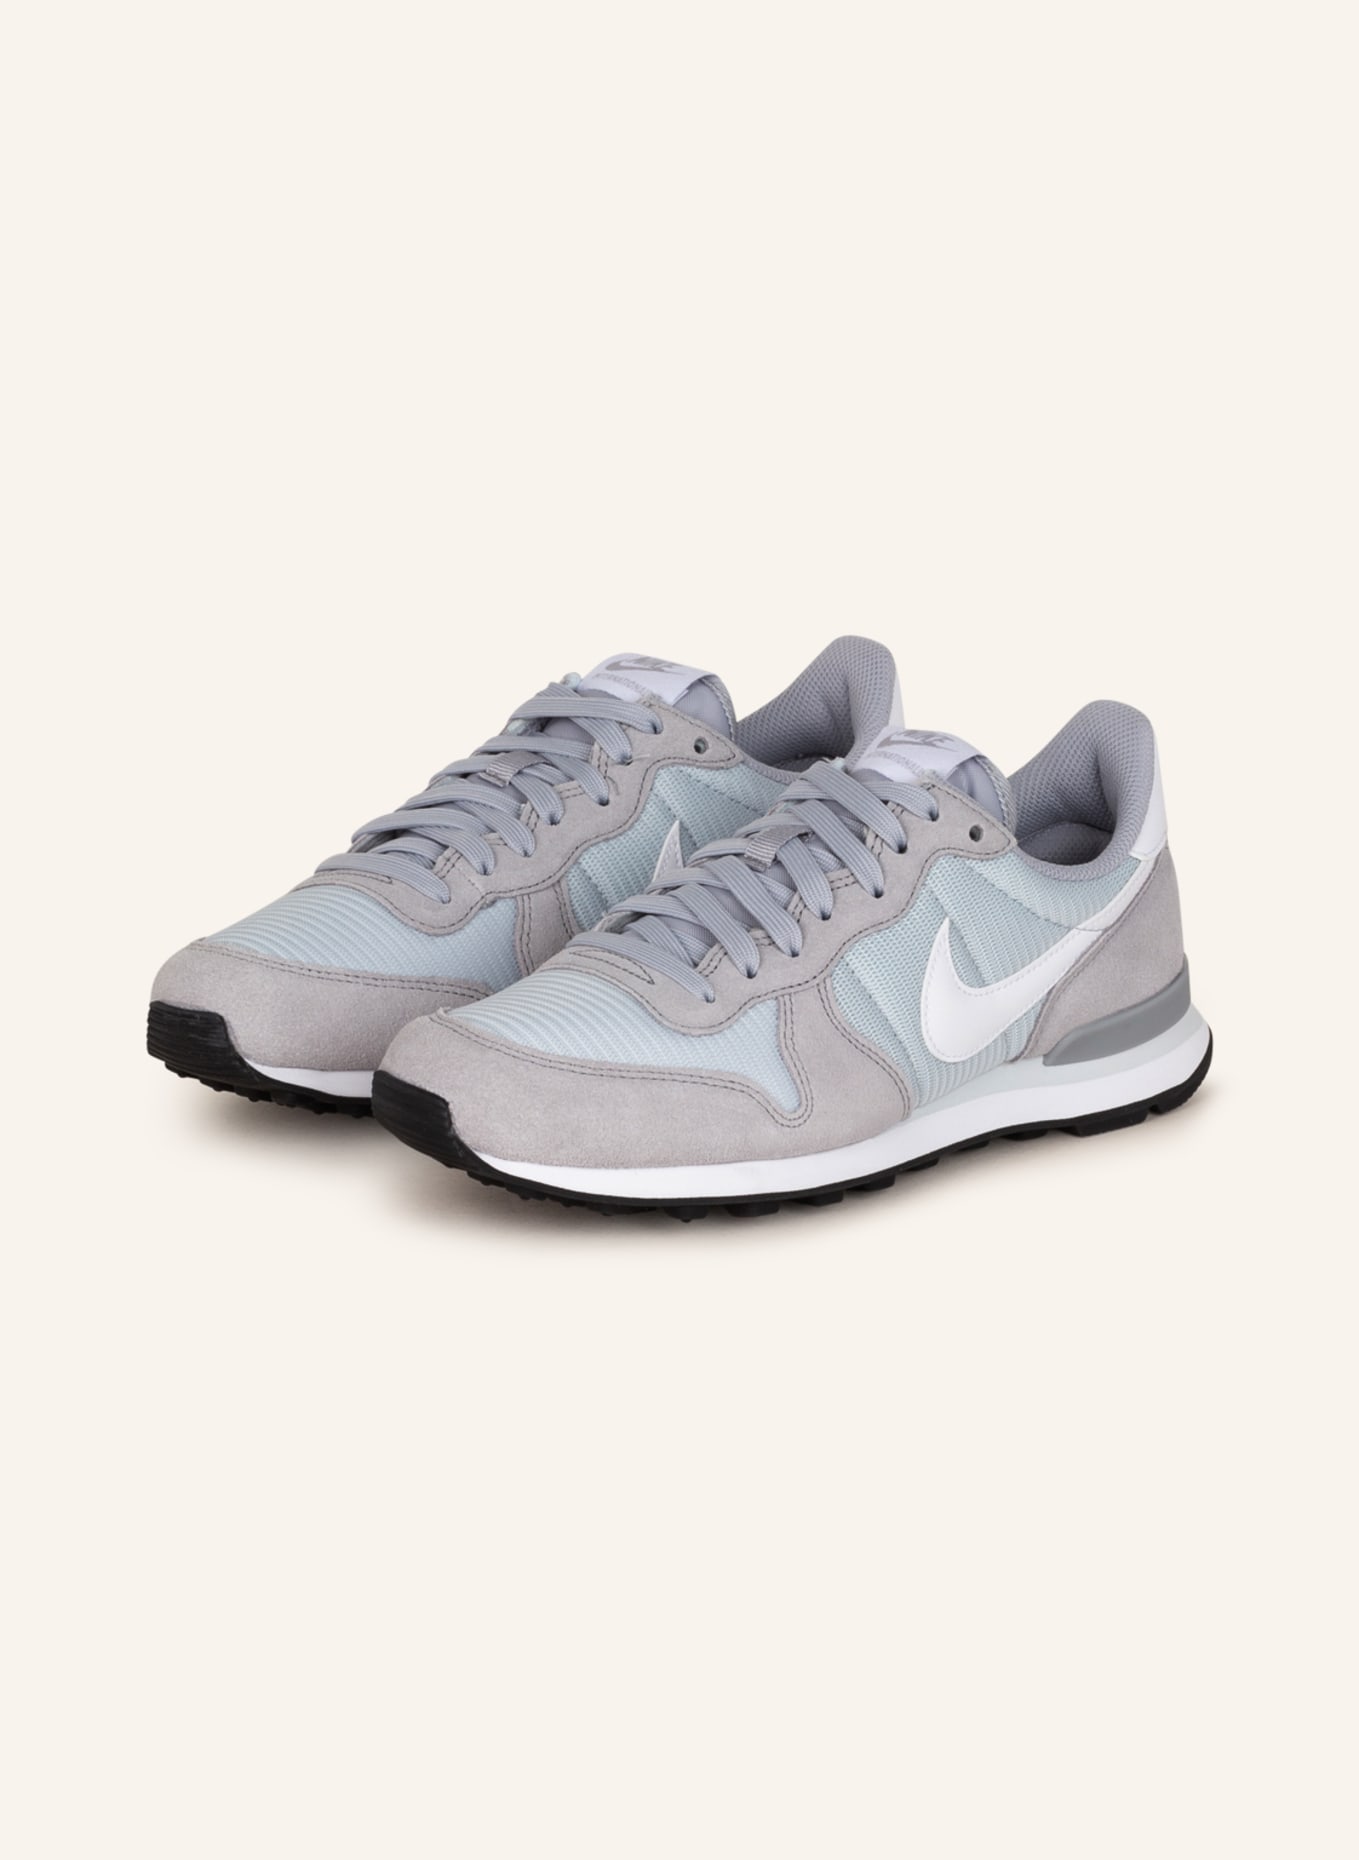 Nike INTERNATIONALIST light gray/ light blue | Breuninger